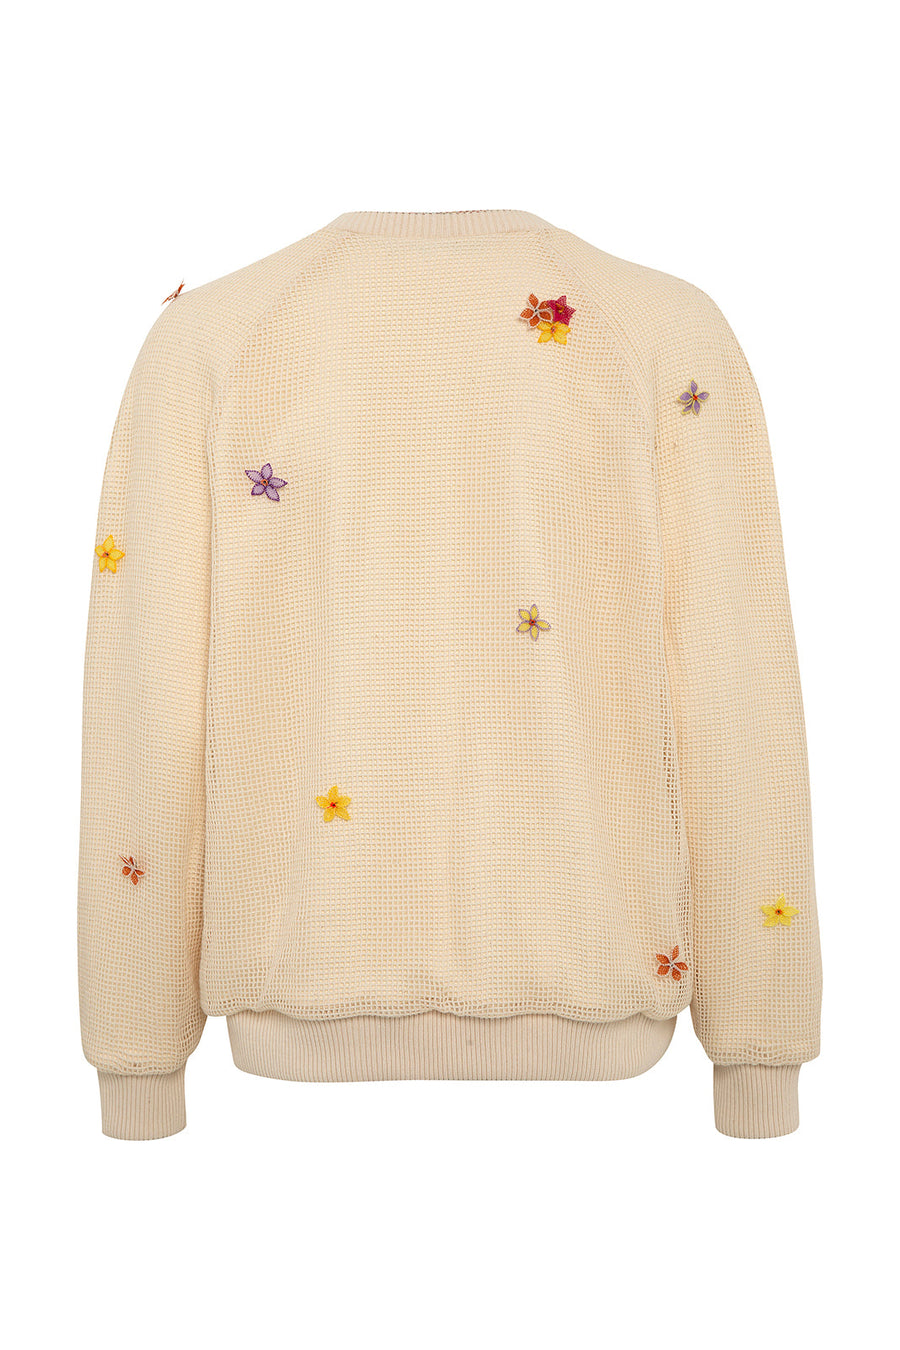 MARC - Crewneck sweatshirt with crocheted flowers